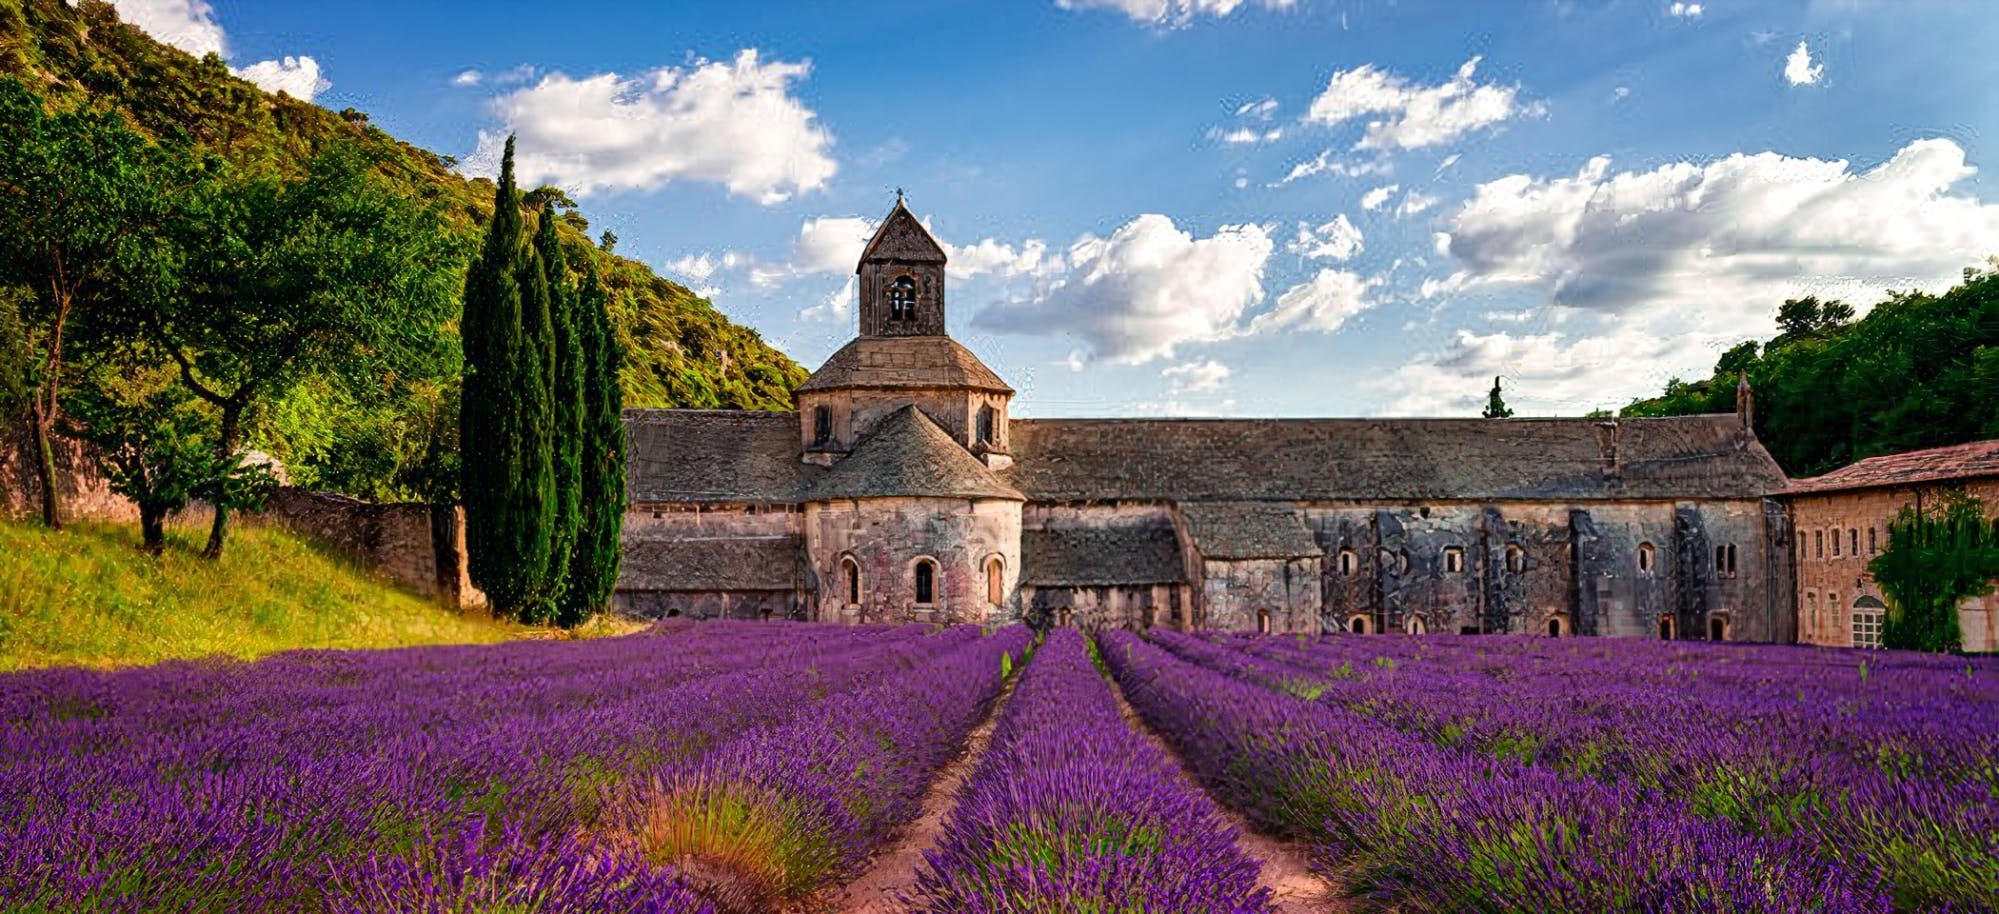 Sault-lavendelvelden: een hele dag rondleiding vanuit Avignon